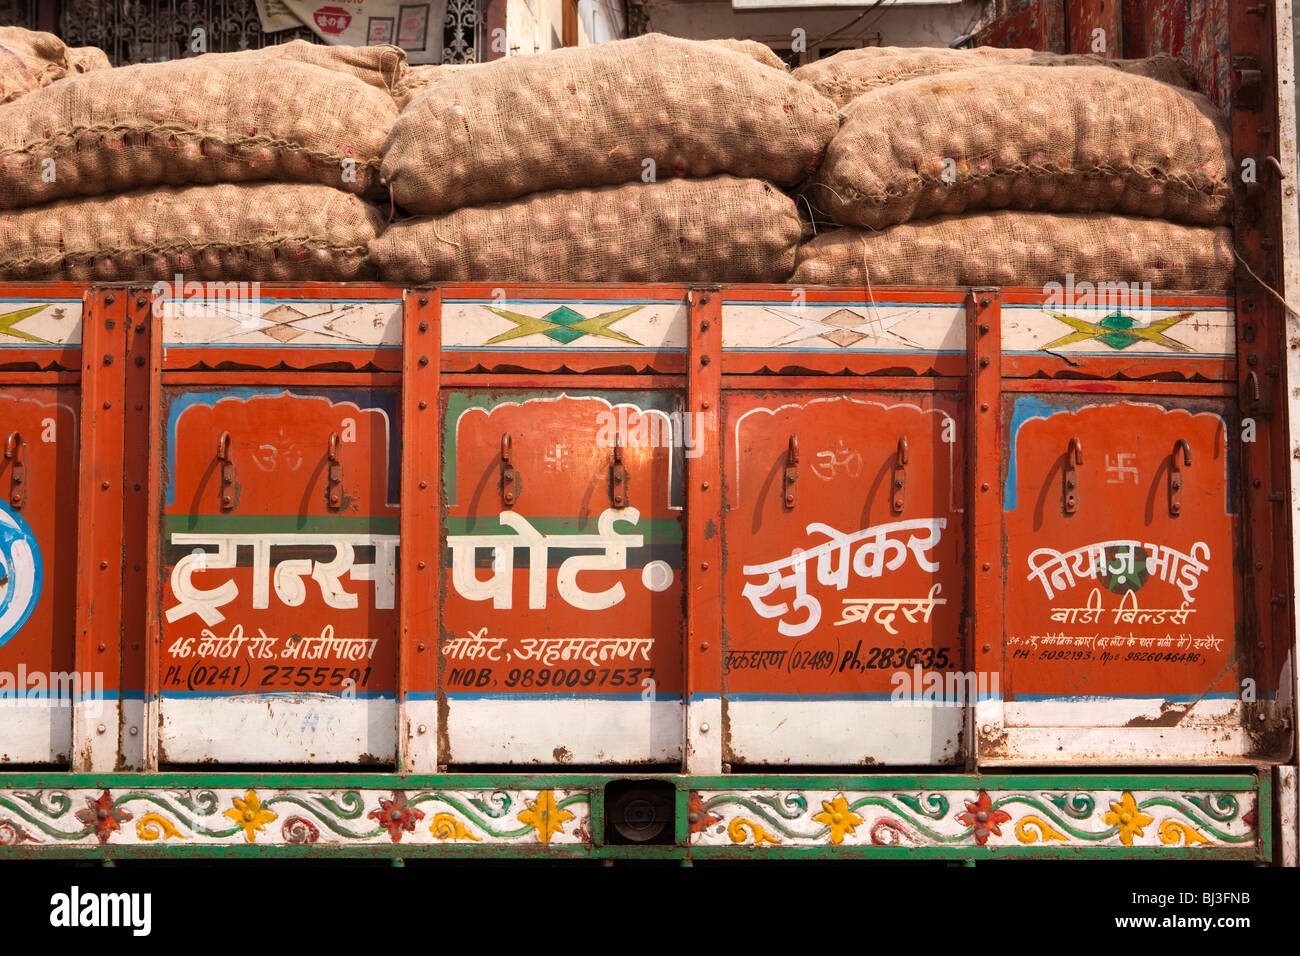 India, Kerala, Calicut, Kozhikode, Big Bazaar, decorated side of truck carrying onions from Maharashtra Stock Photo